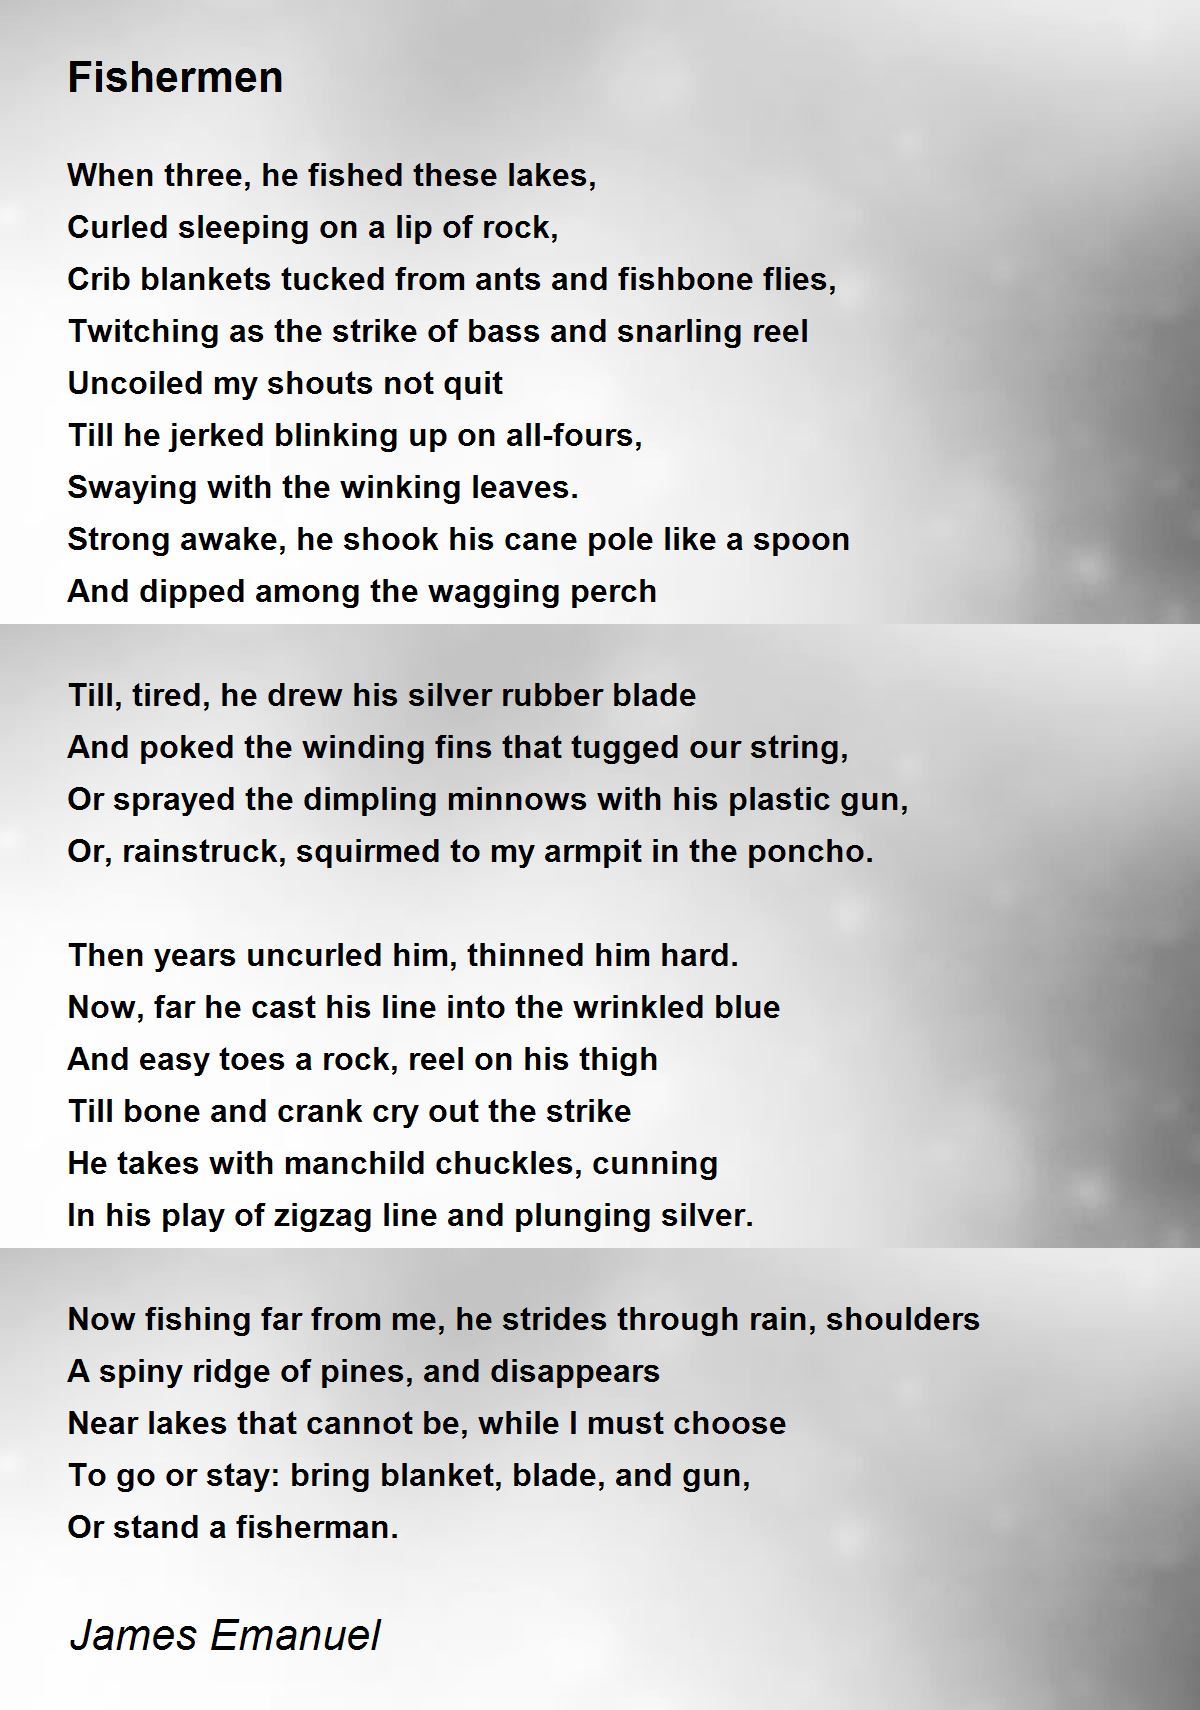 Fishermen - Fishermen Poem by James Emanuel